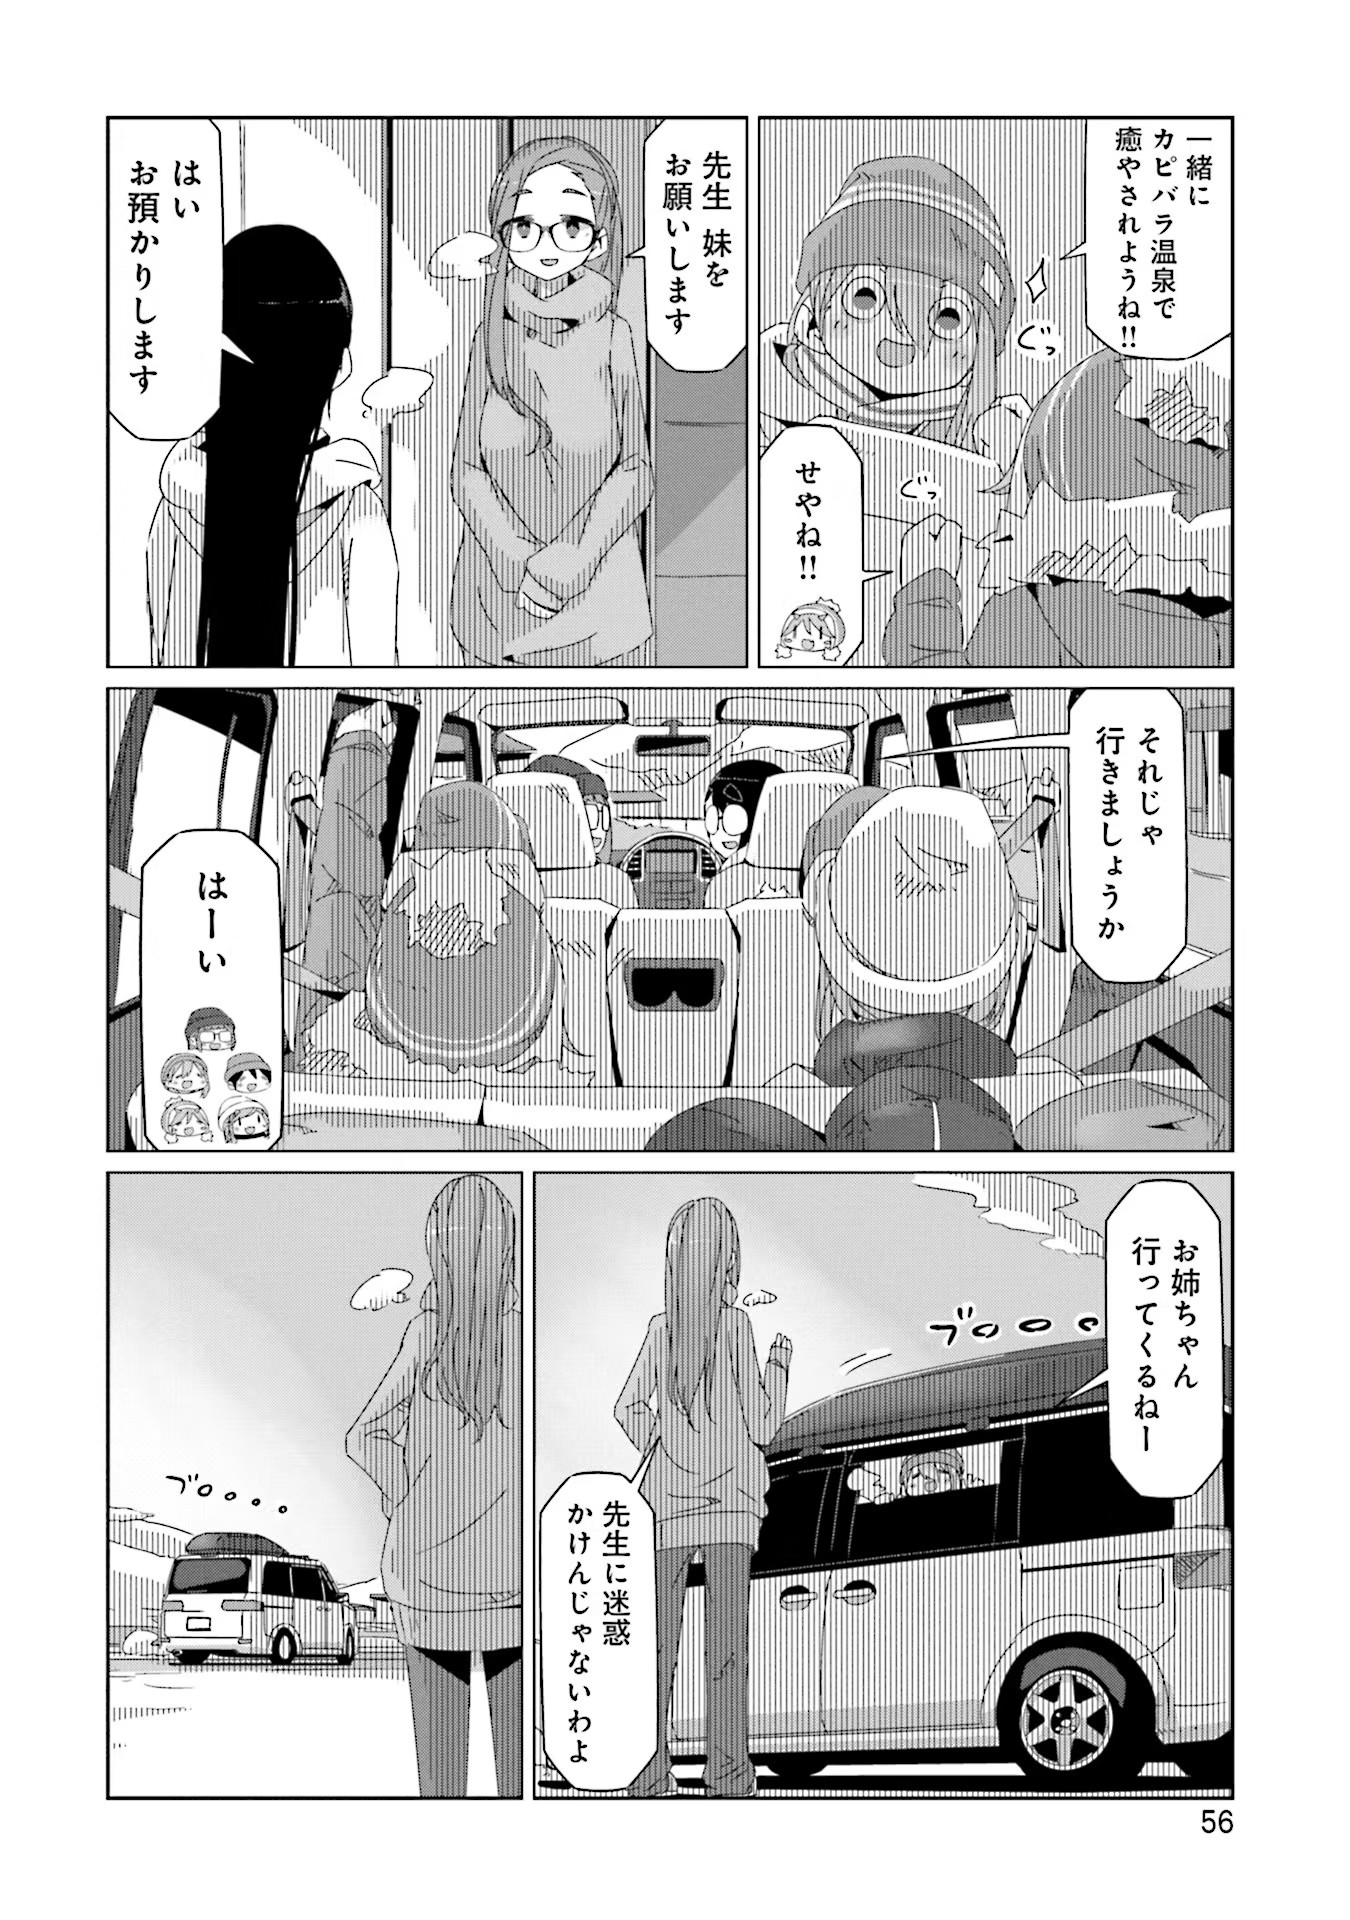 Yuru Camp - Chapter 43 - Page 2